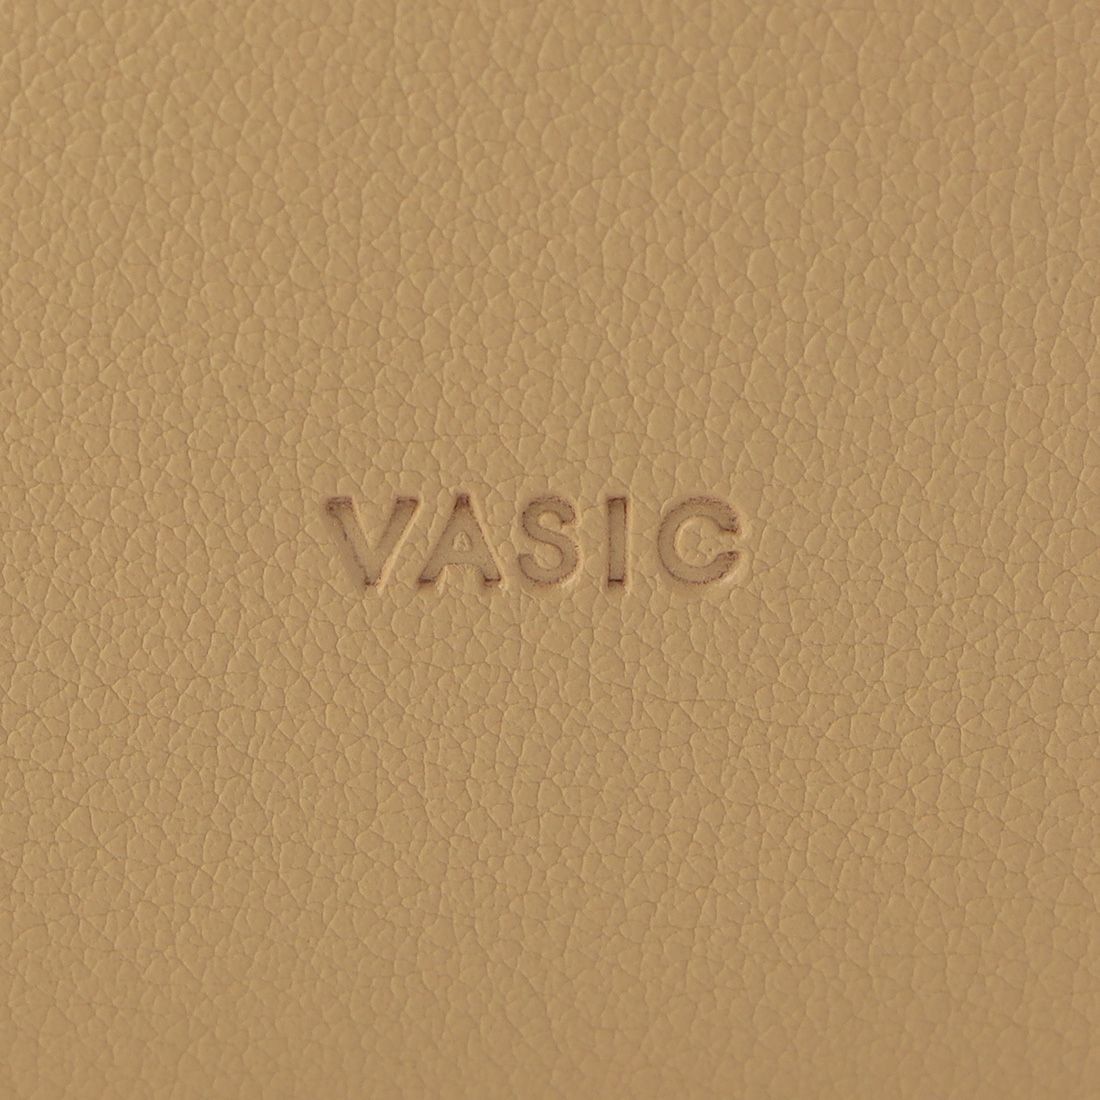 VASIC（ヴァジック）”PATTI MINI”トートバッグ